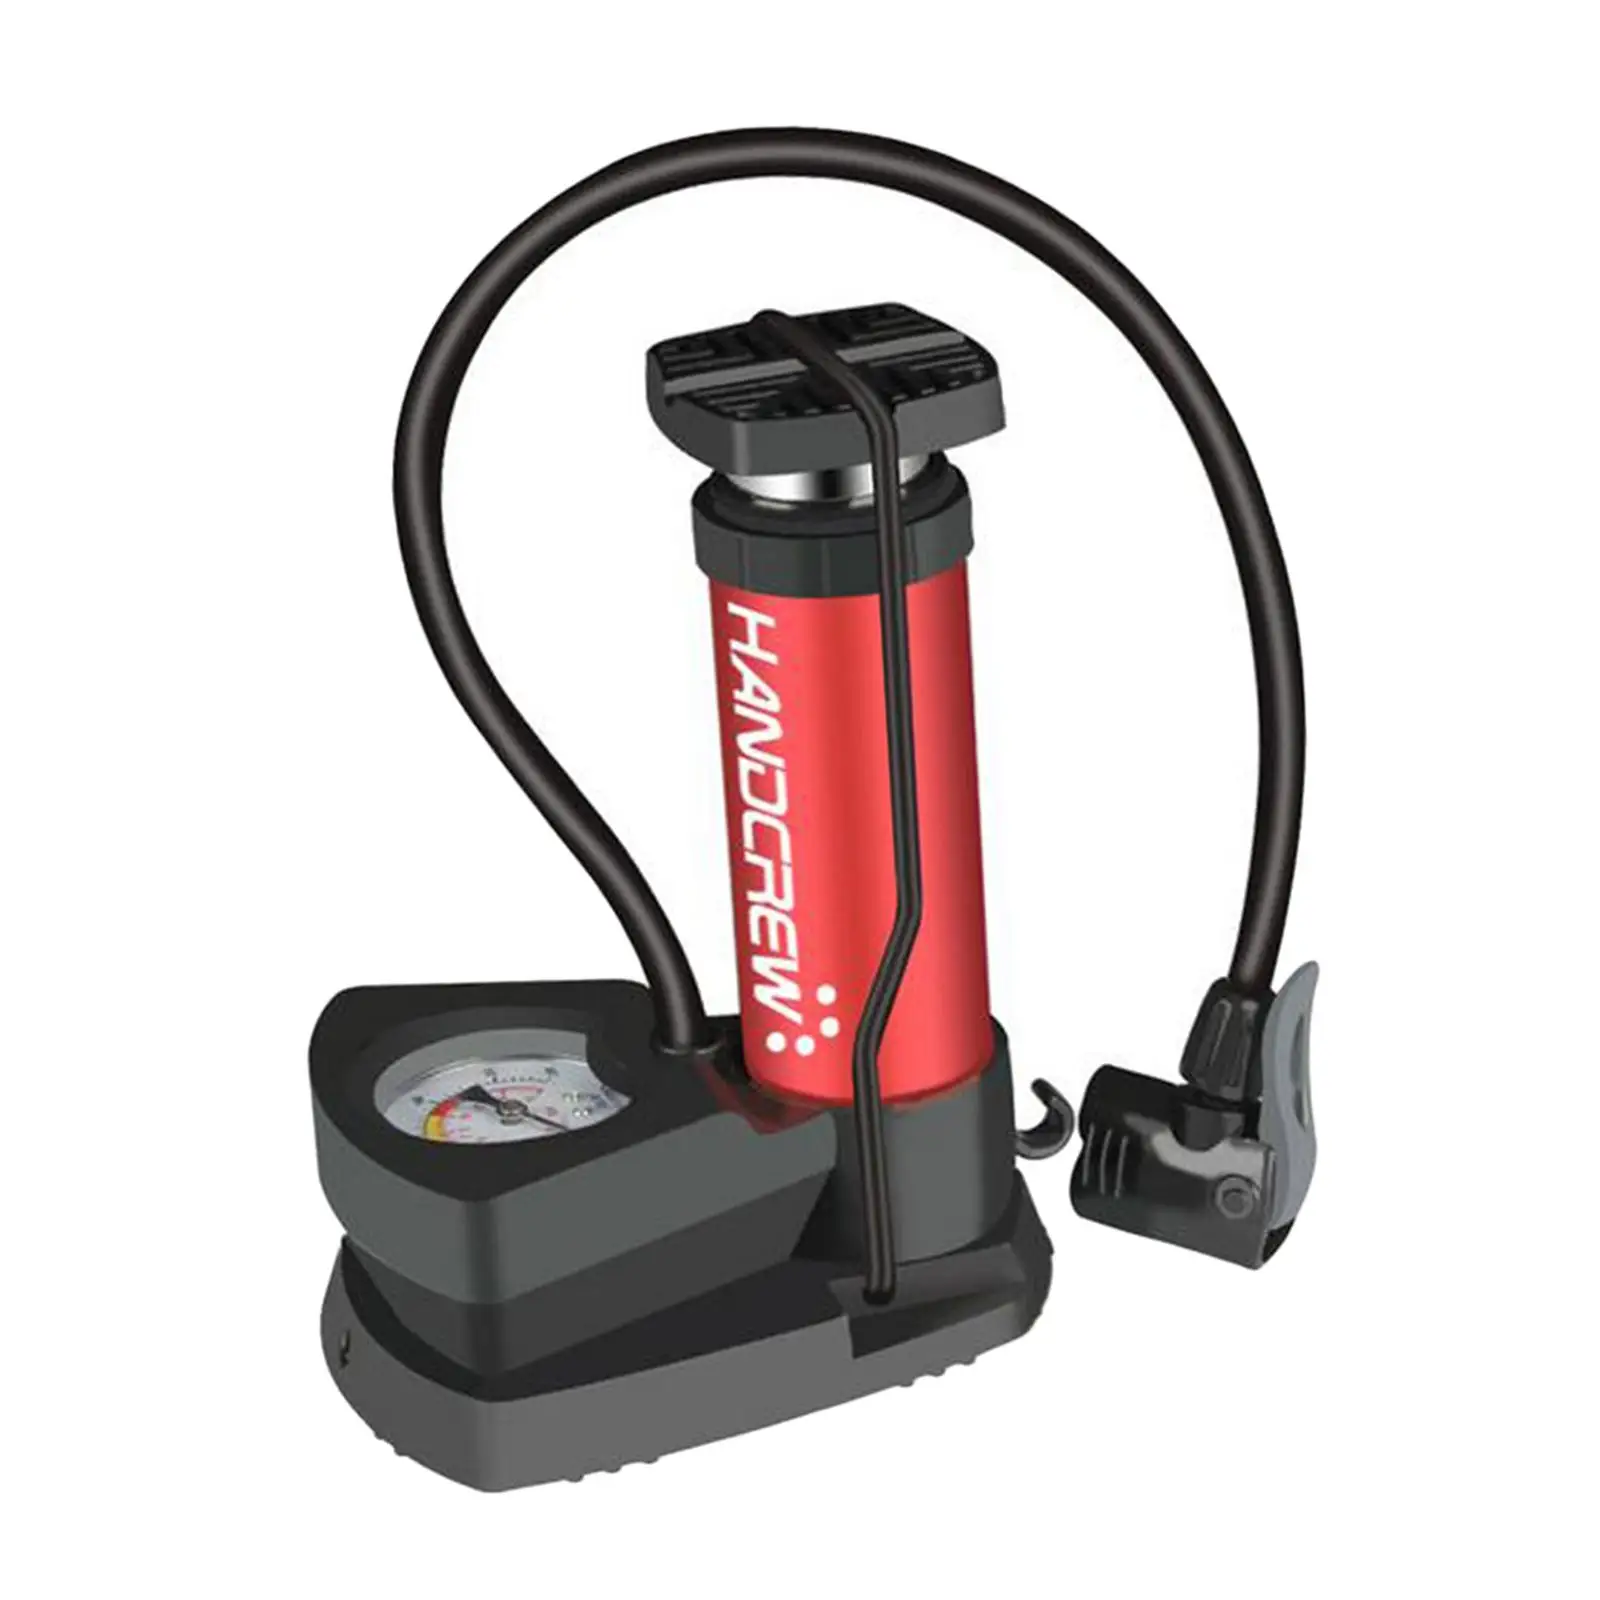  Pump Portable  Foot Pump with Pressure  Bike Tire Air Pump for Mountain Road Bike,Fits  & 